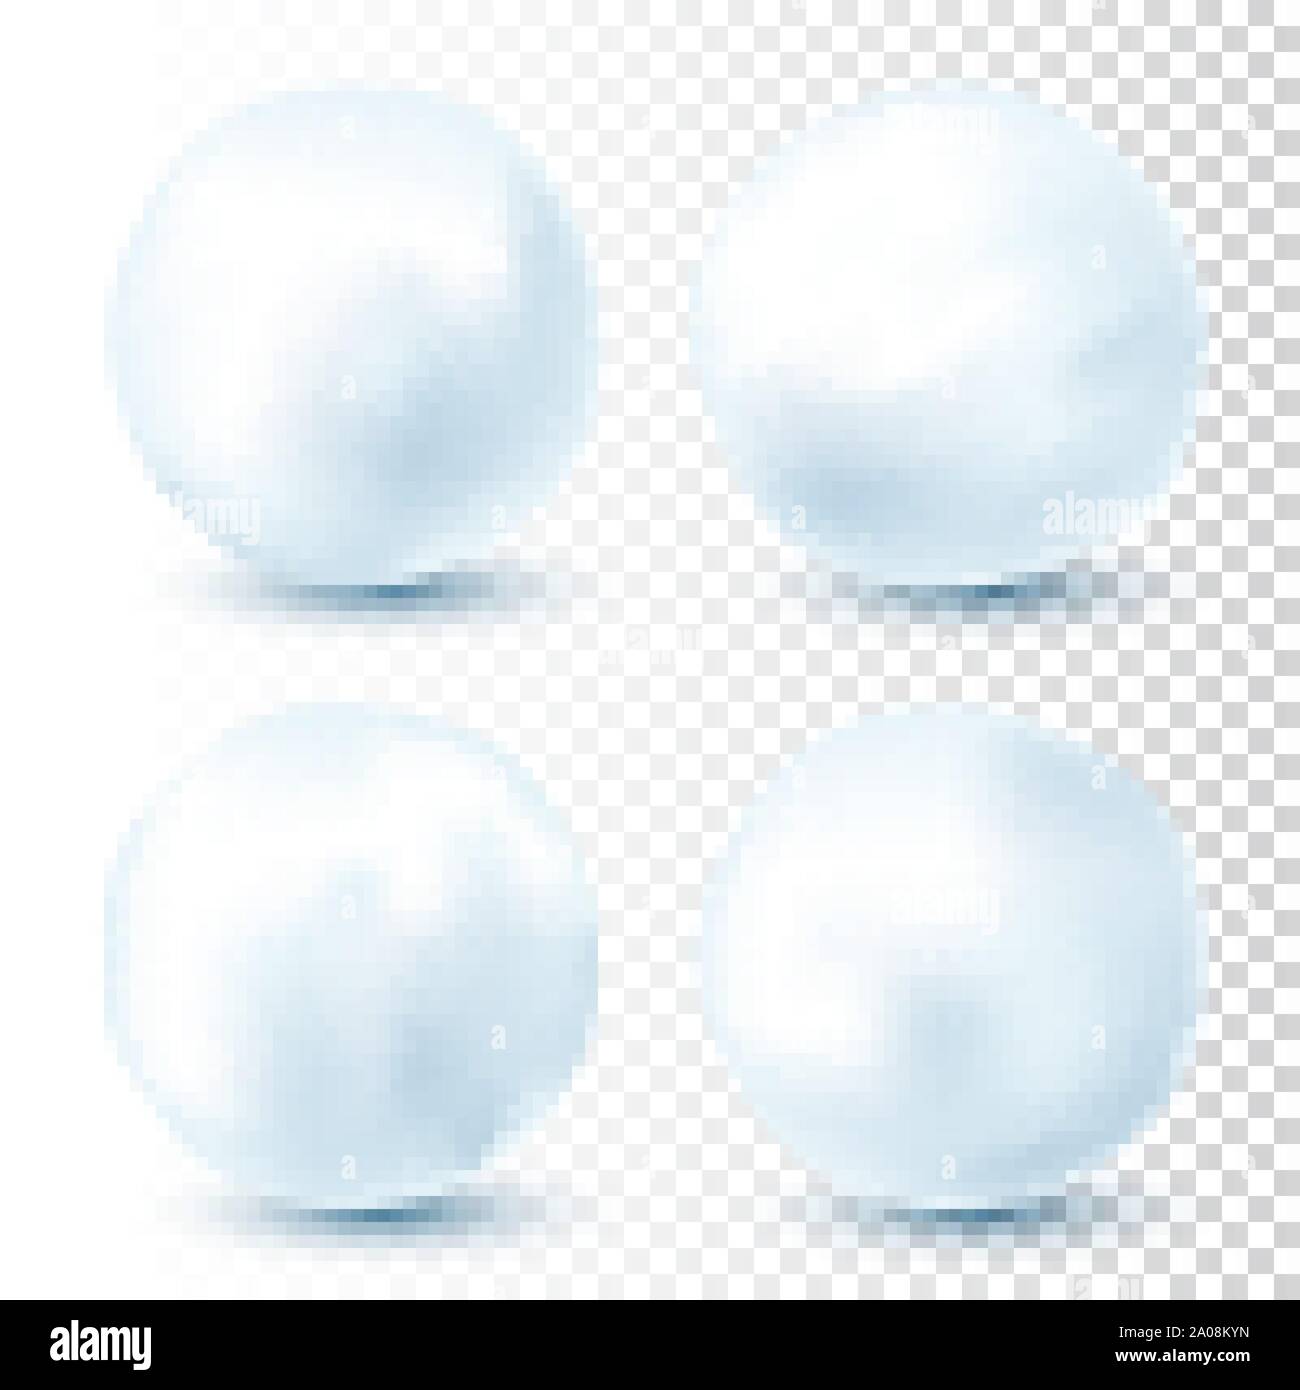 Snowball Transparent Background